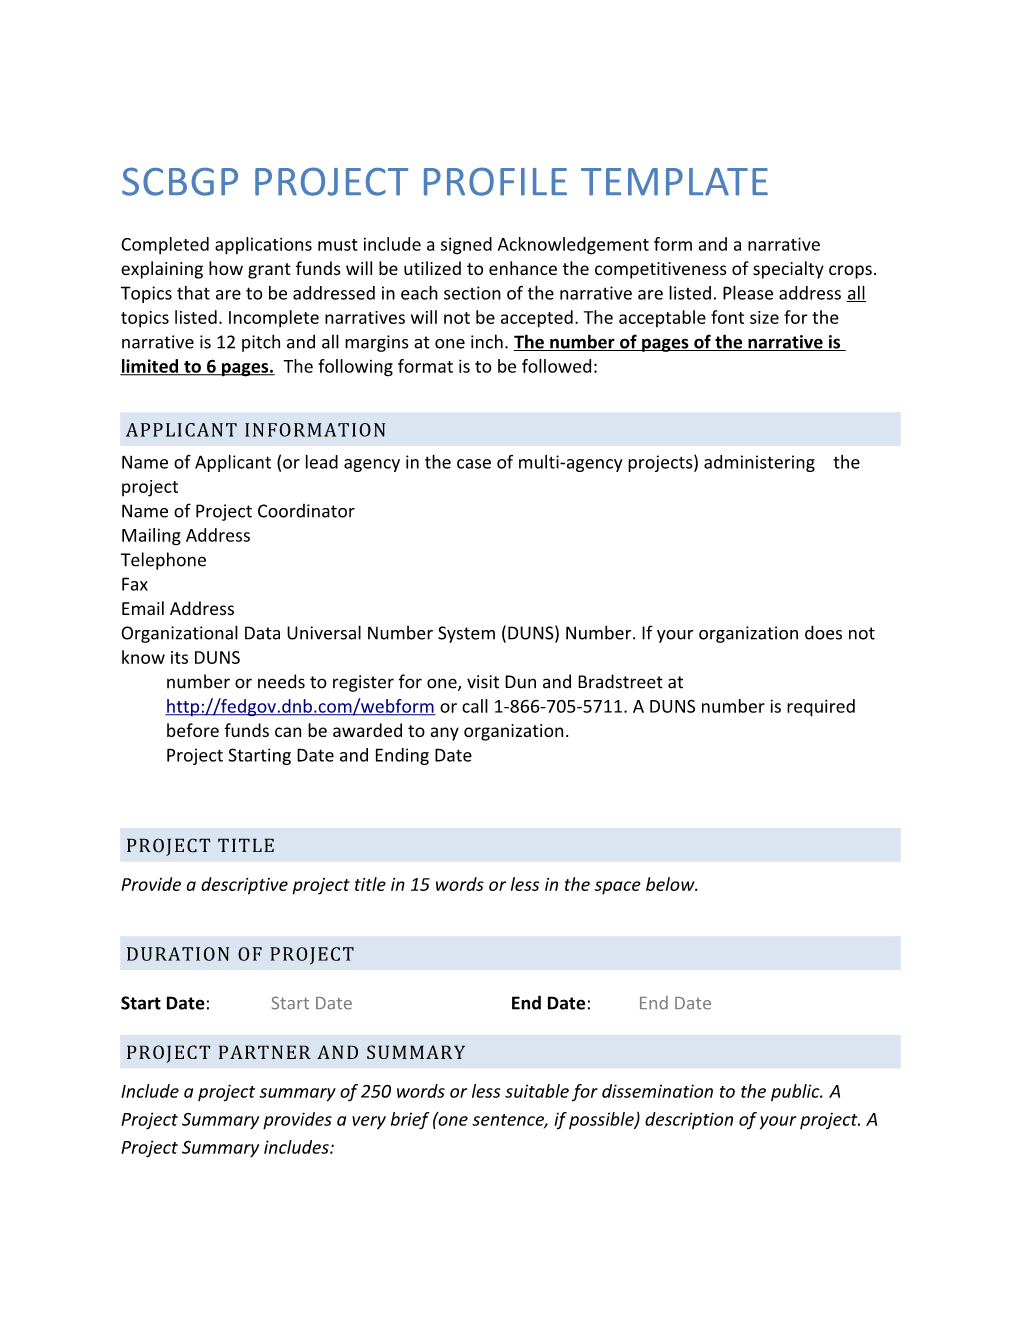 SCBGP Project Profile Template